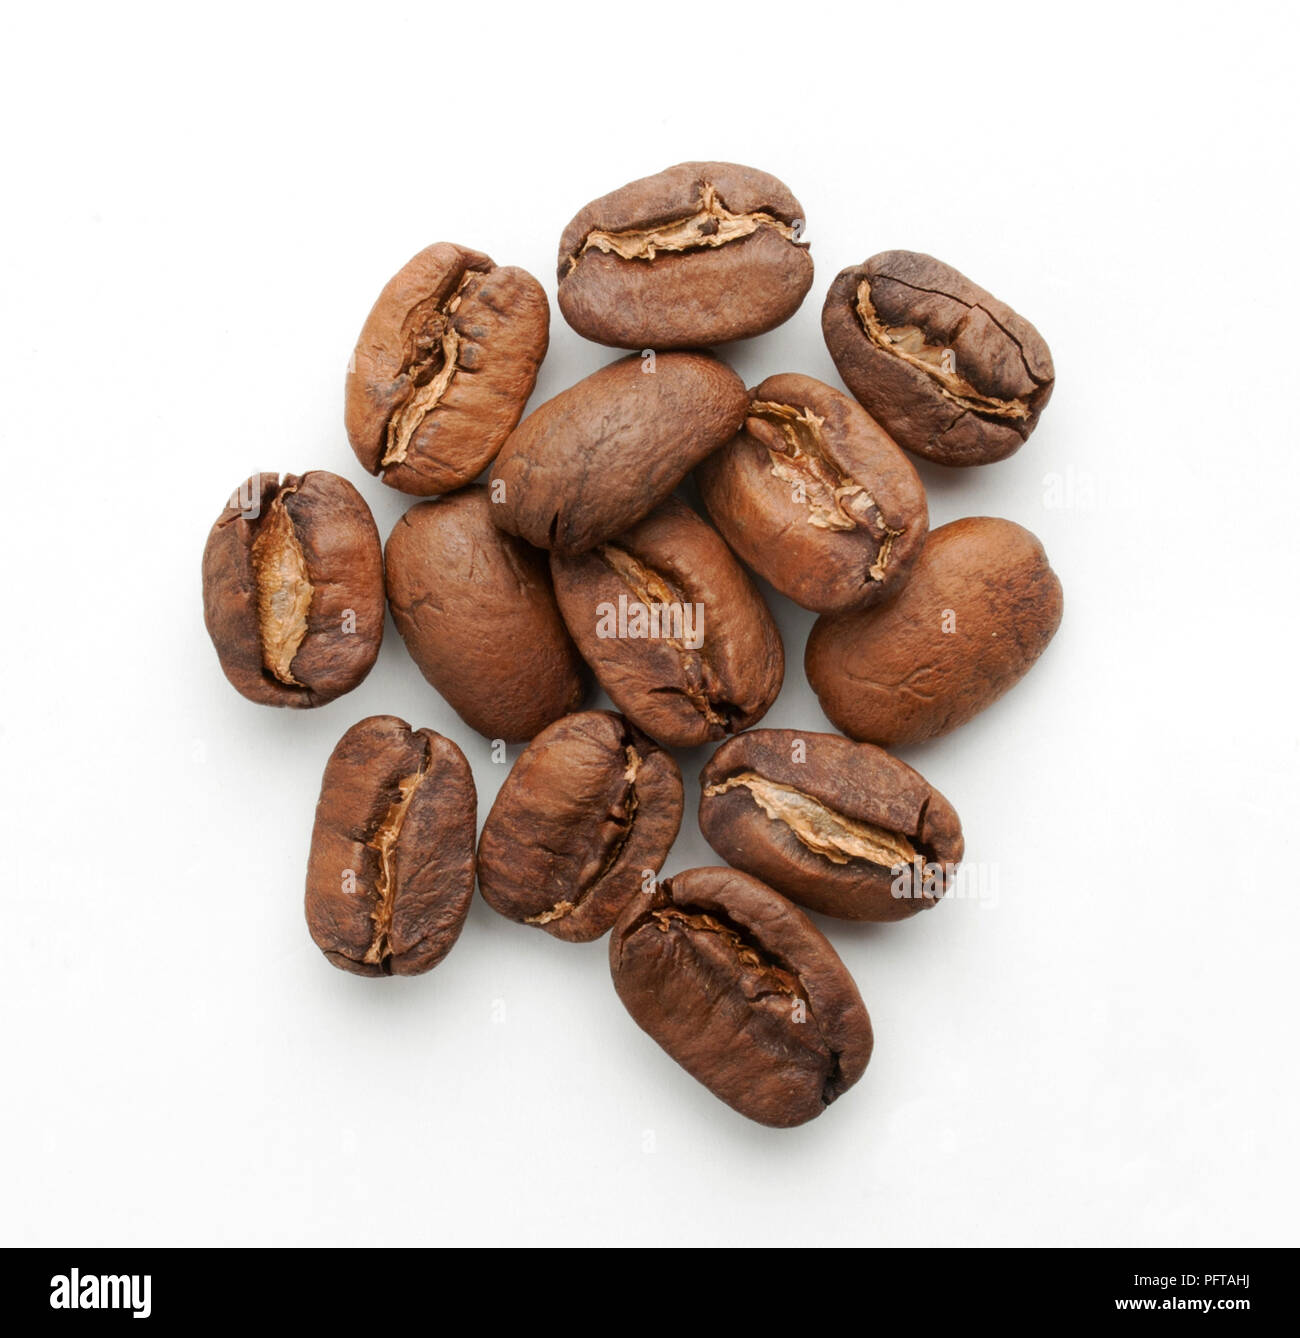 Nicaragua, roasted Maracaturra washed coffee beans Stock Photo